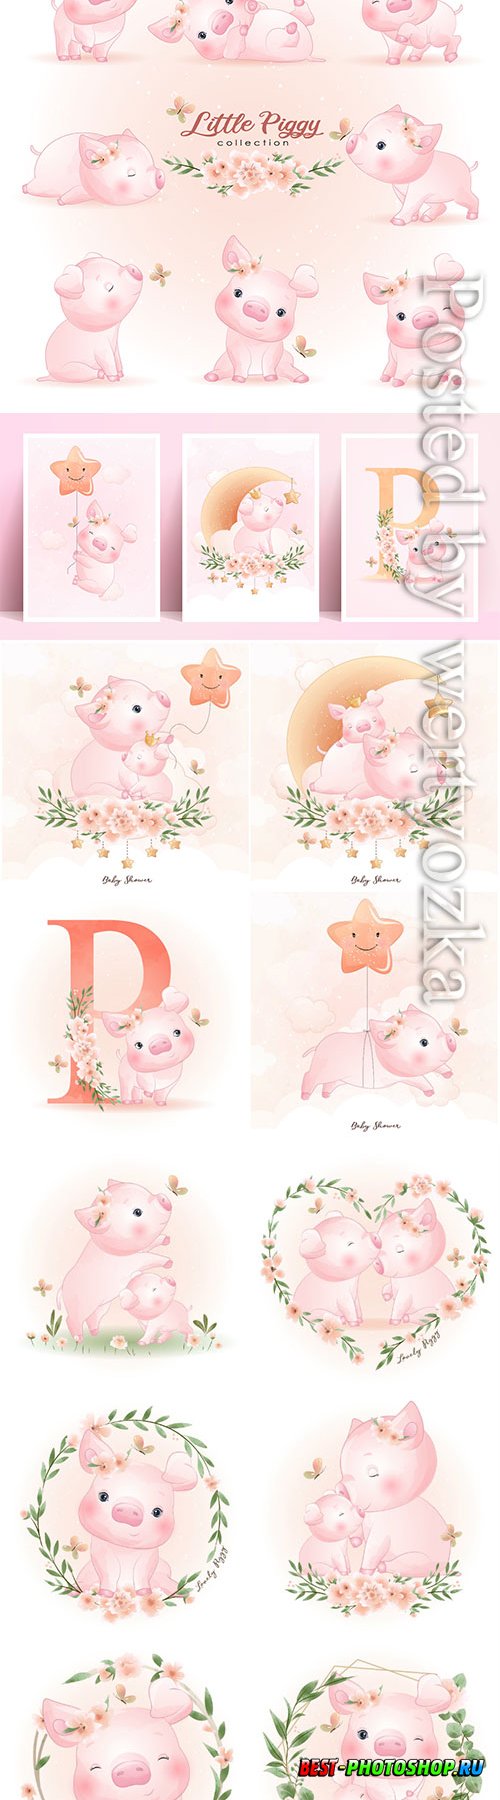 Cute doodle piggy poses with floral illustration premium vector